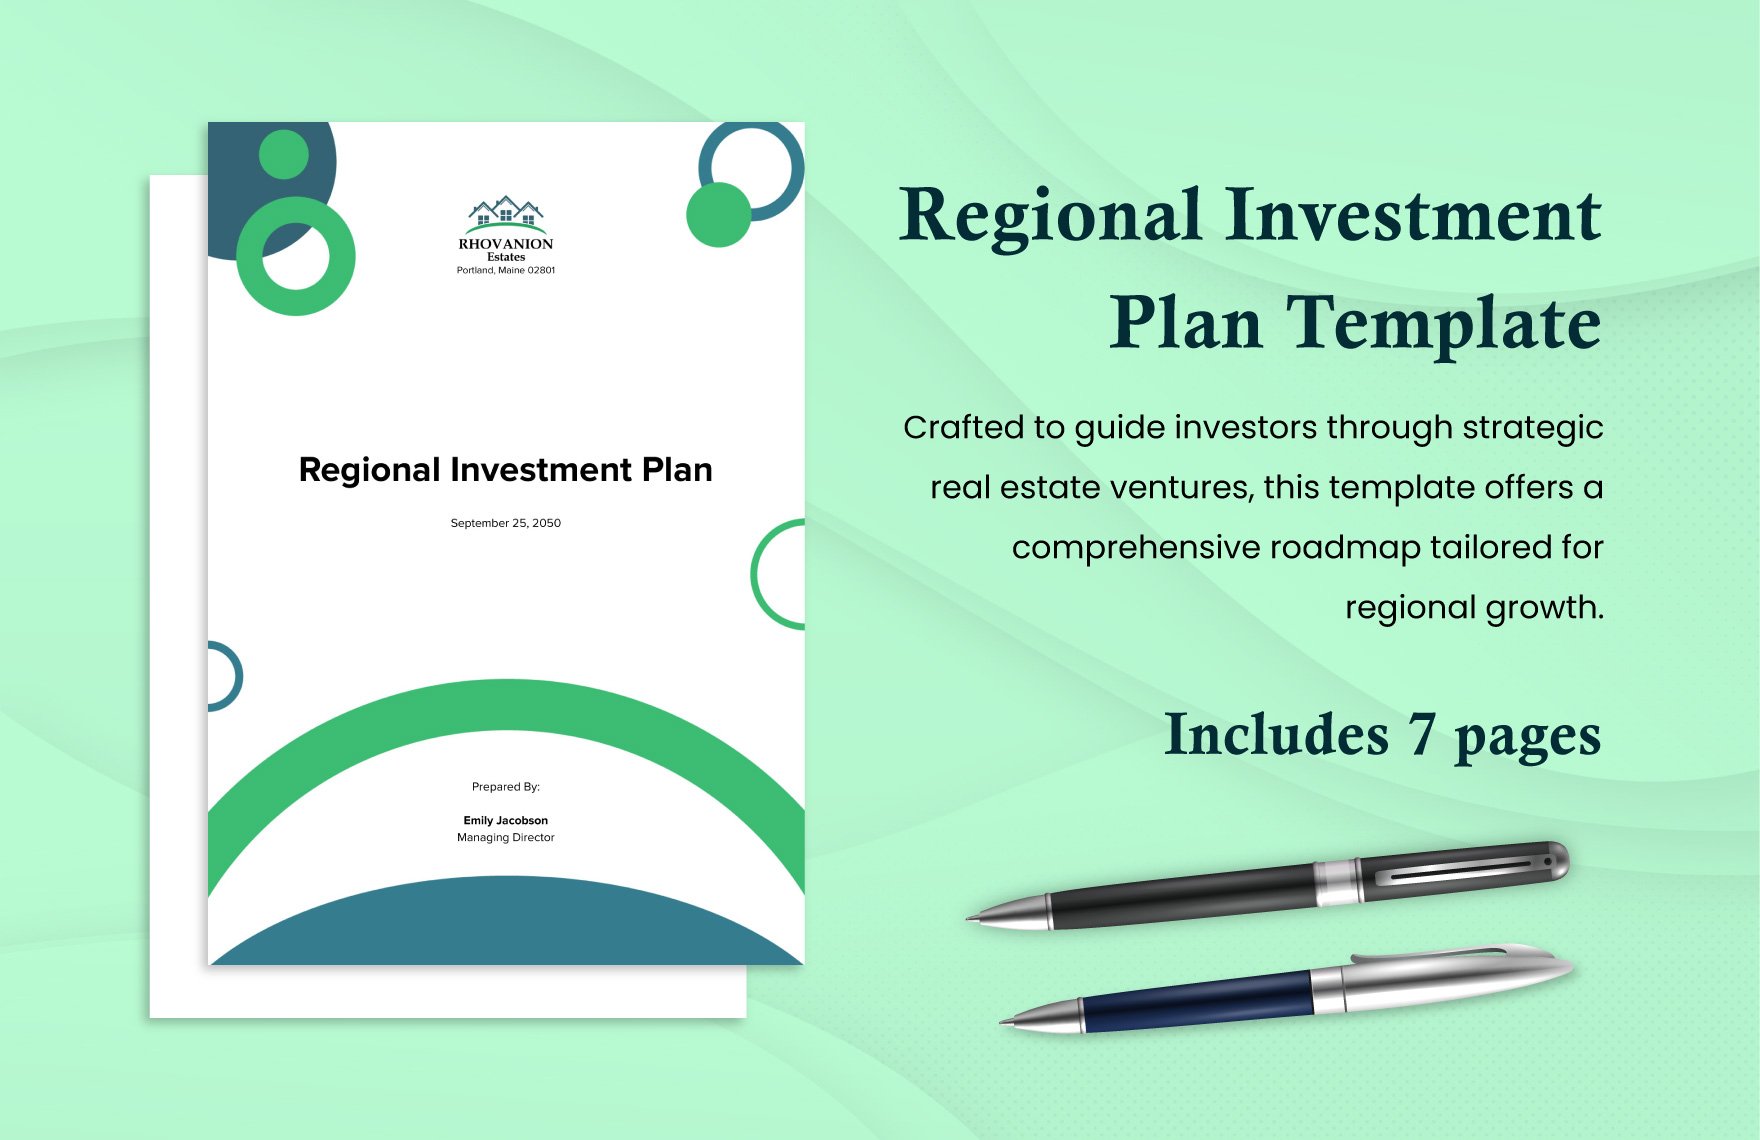 Regional Investment Plan Template